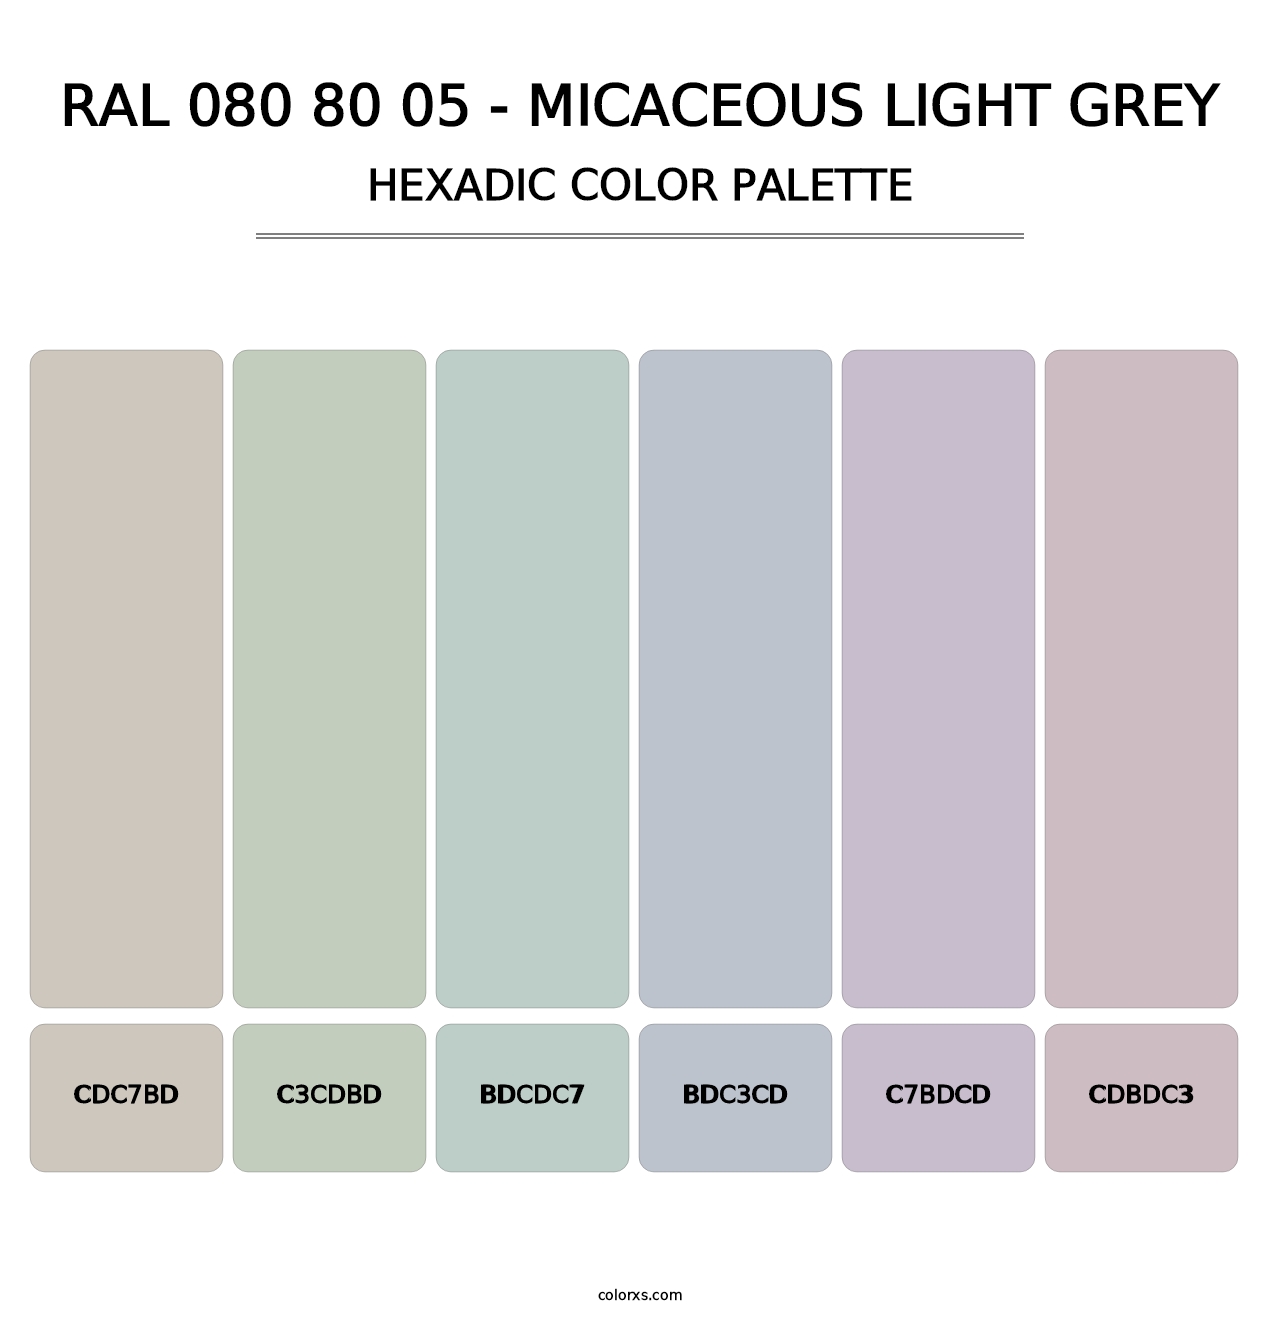 RAL 080 80 05 - Micaceous Light Grey - Hexadic Color Palette